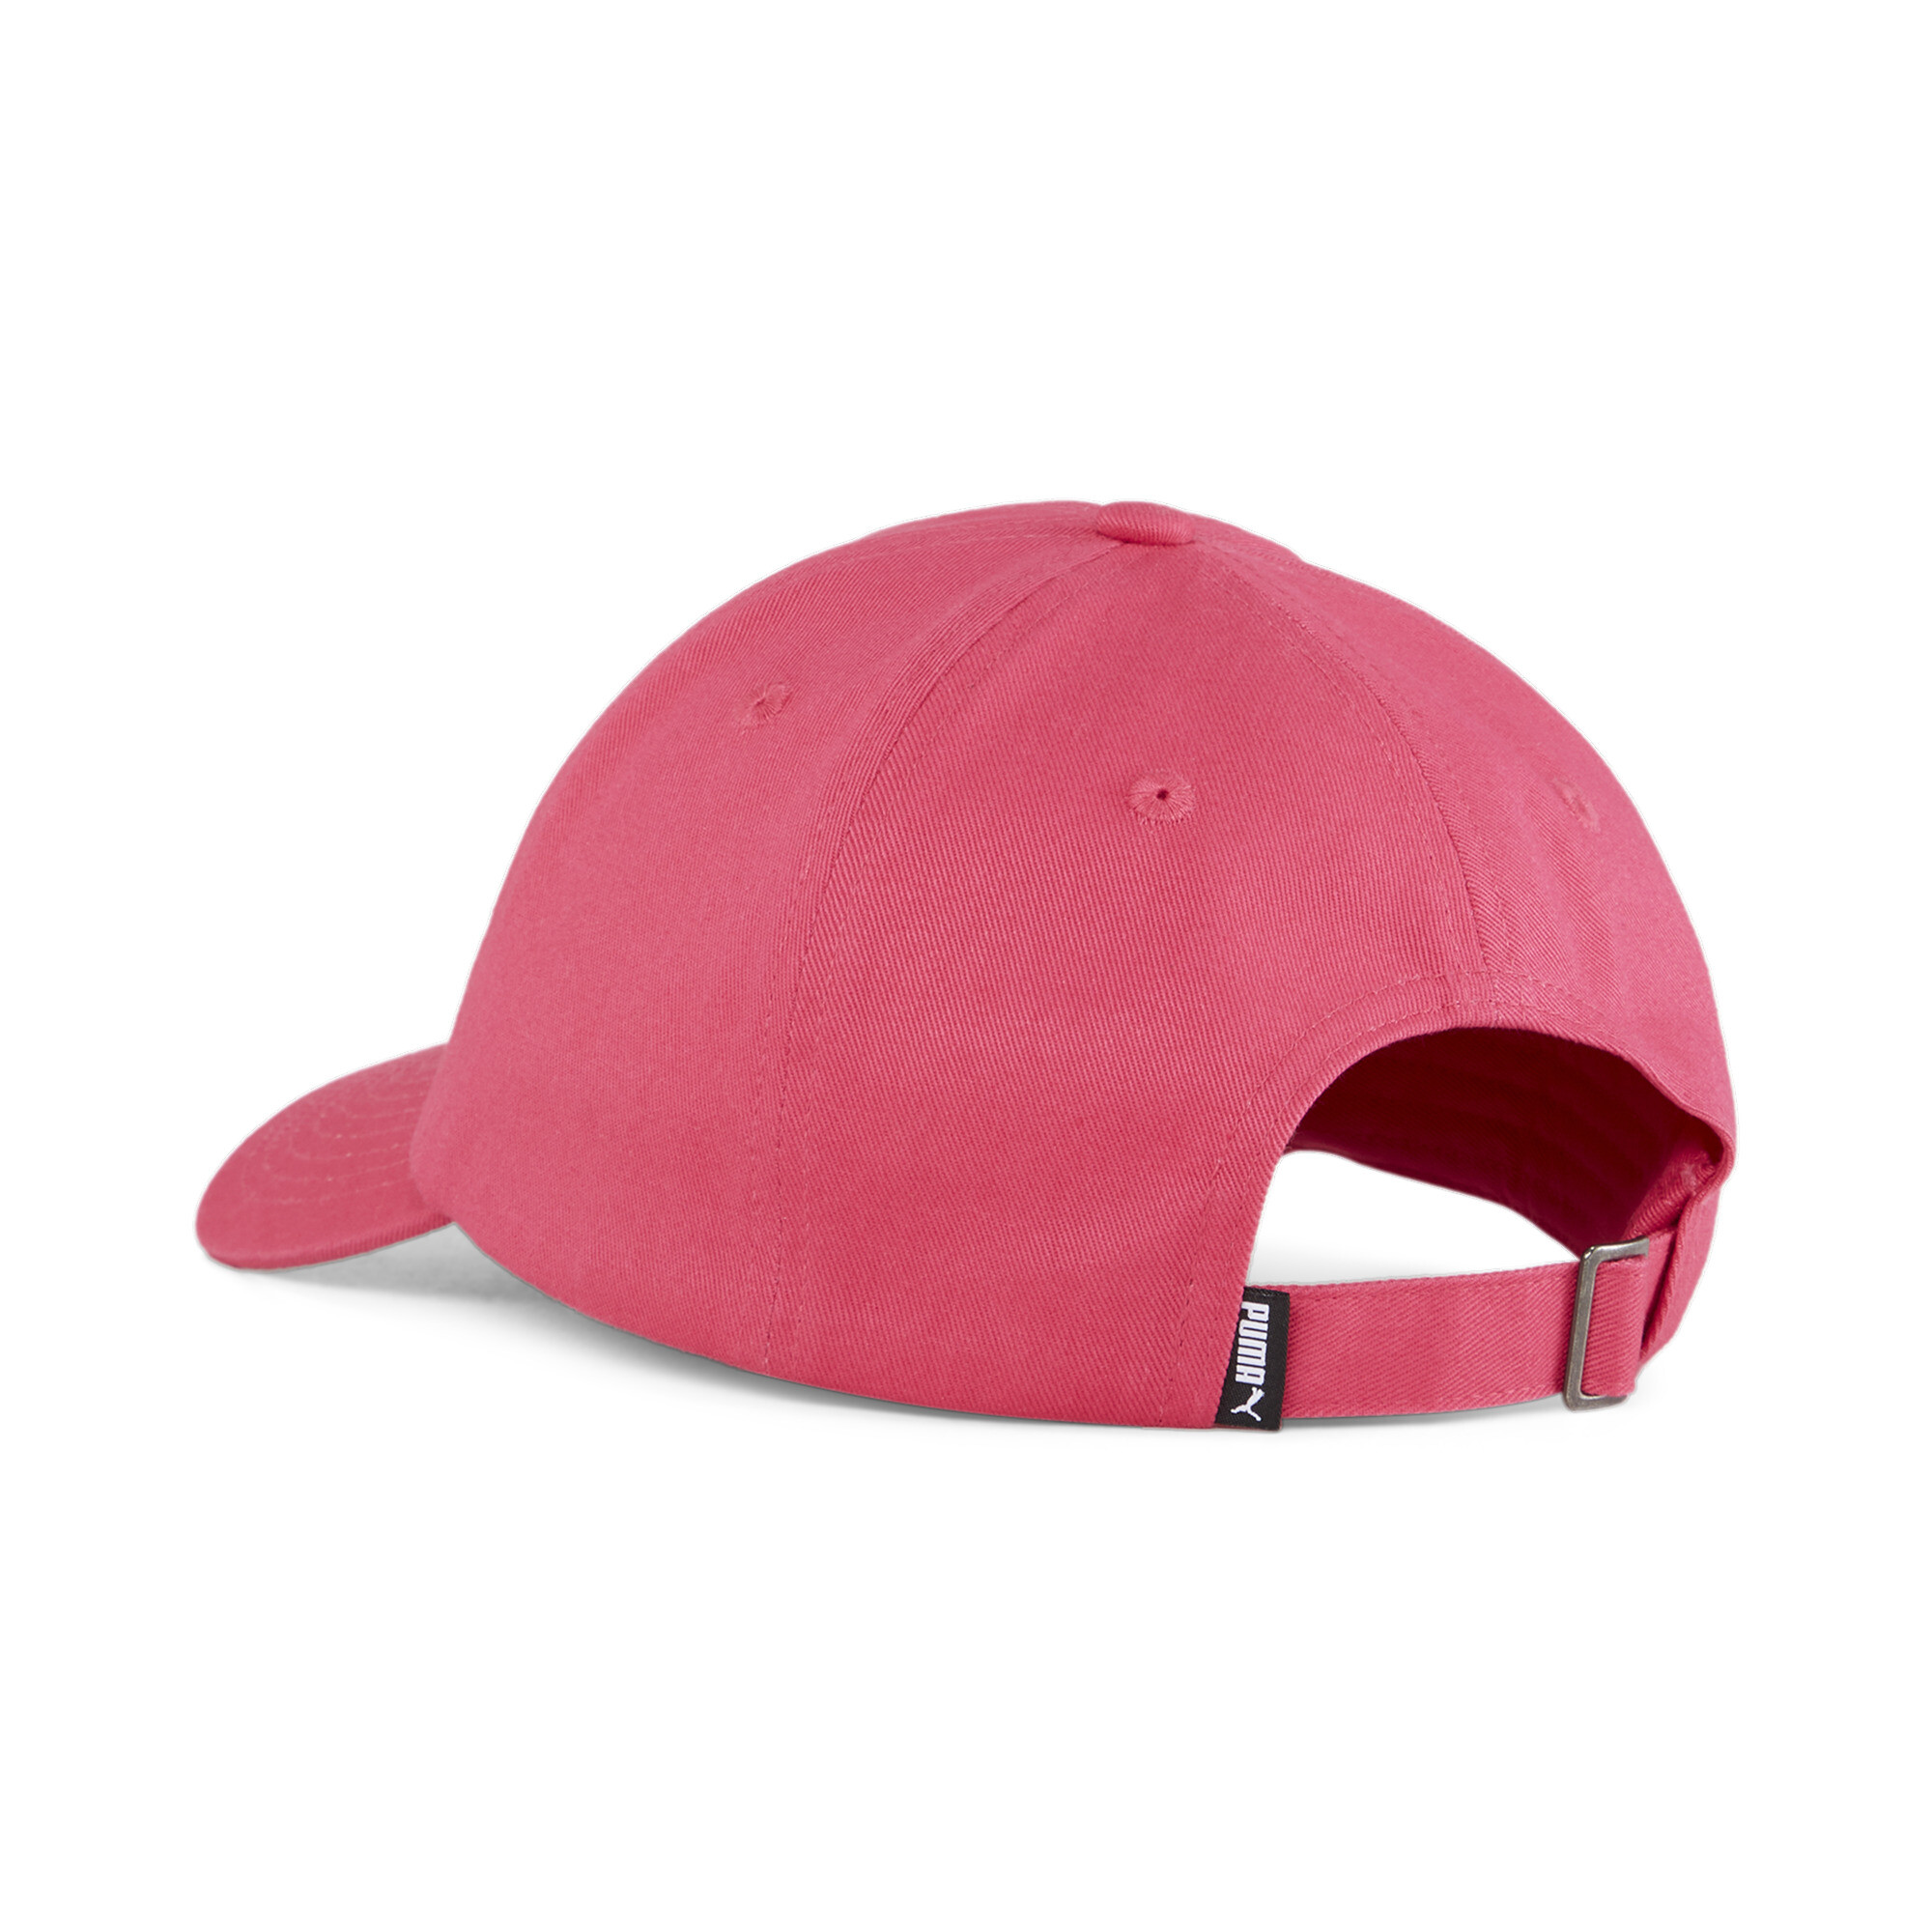 Puma Script Logo Cap, Pink, Size Adult, Accessories